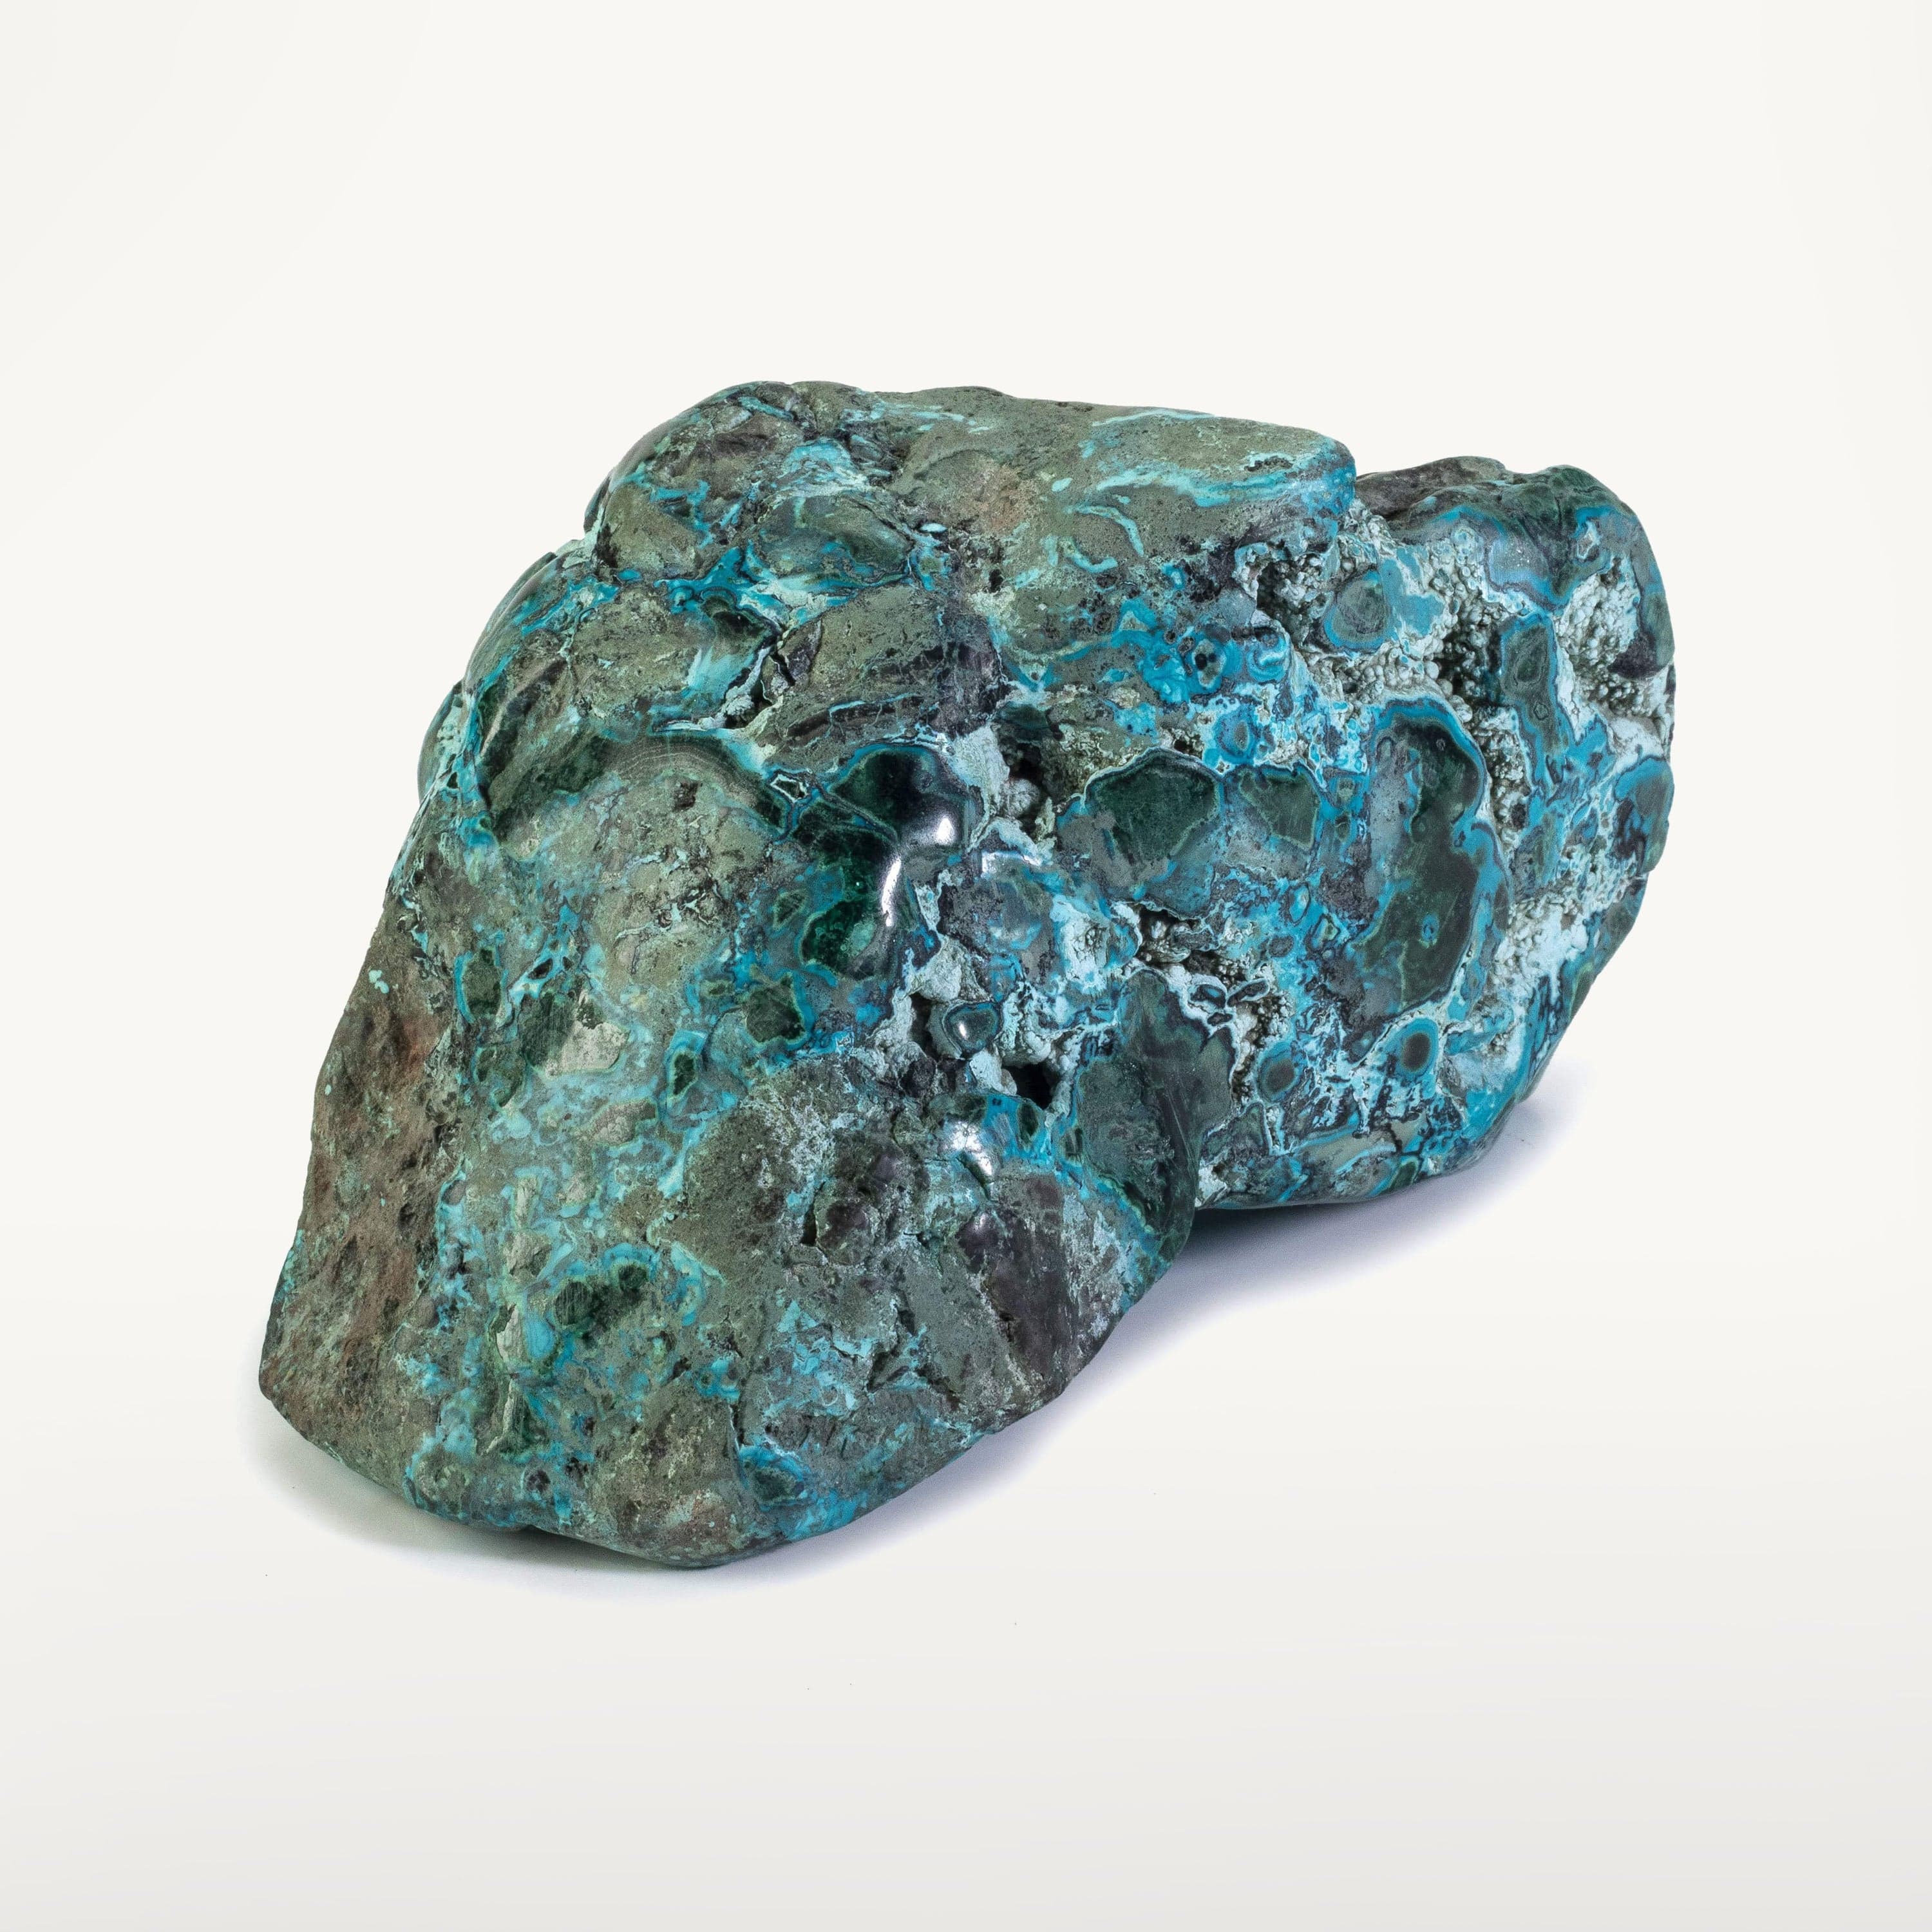 Kalifano Malachite Rare Natural Green Malachite with Blue Chrysocolla Freeform Specimen from Congo - 1.1 kg / 2.3 lbs MAC800.004